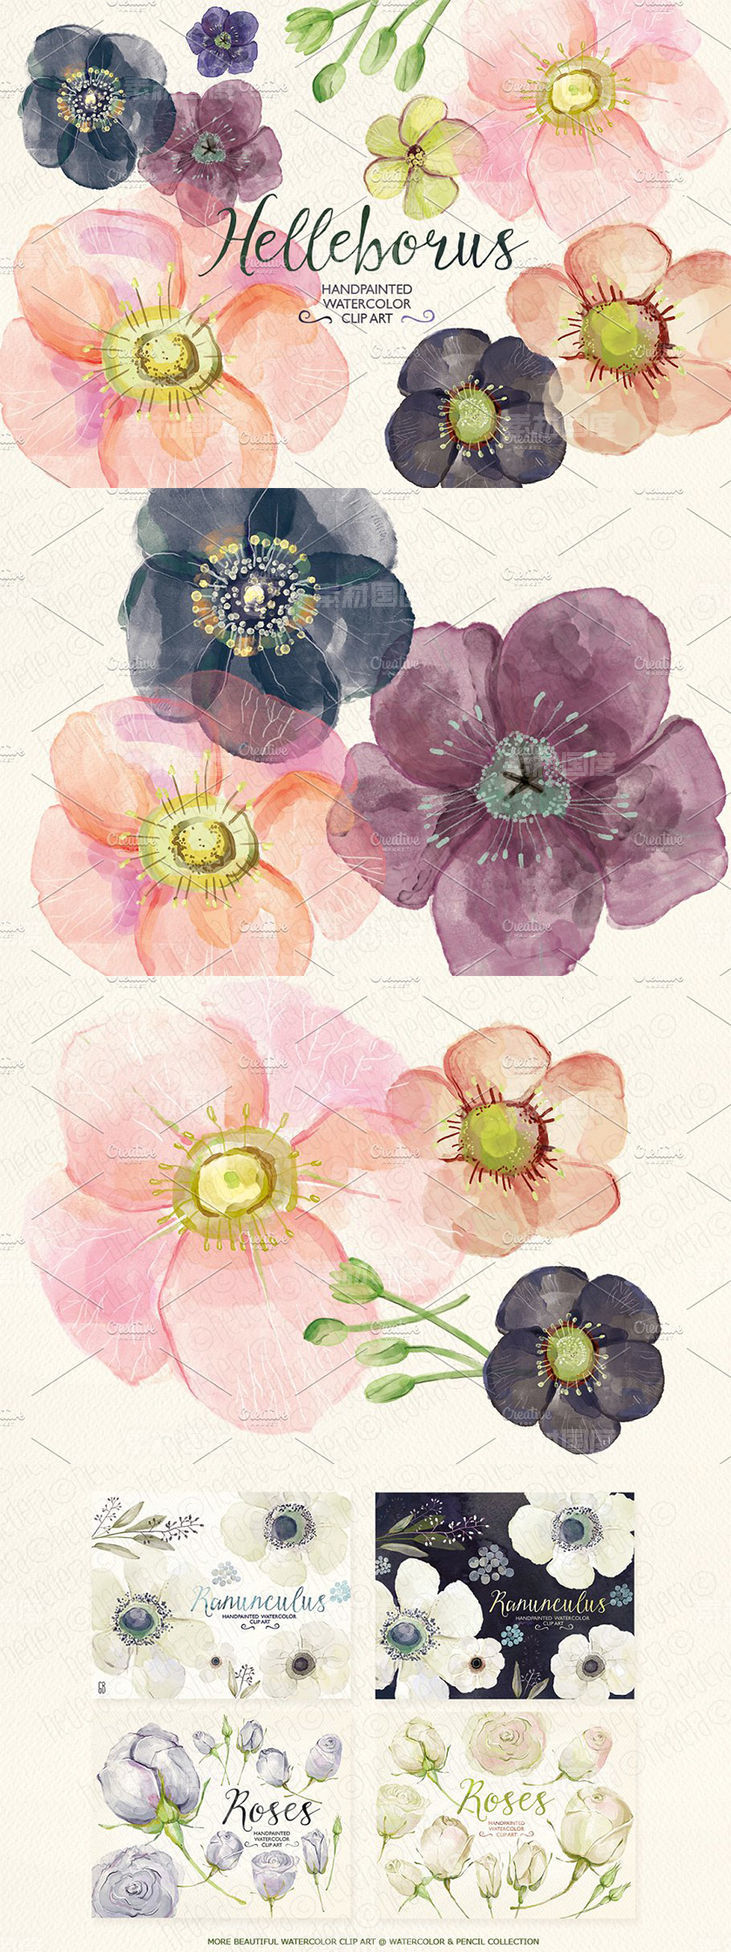 手绘水彩藜芦毛茛属植物图像 Watercolor hellebore flowers clipart